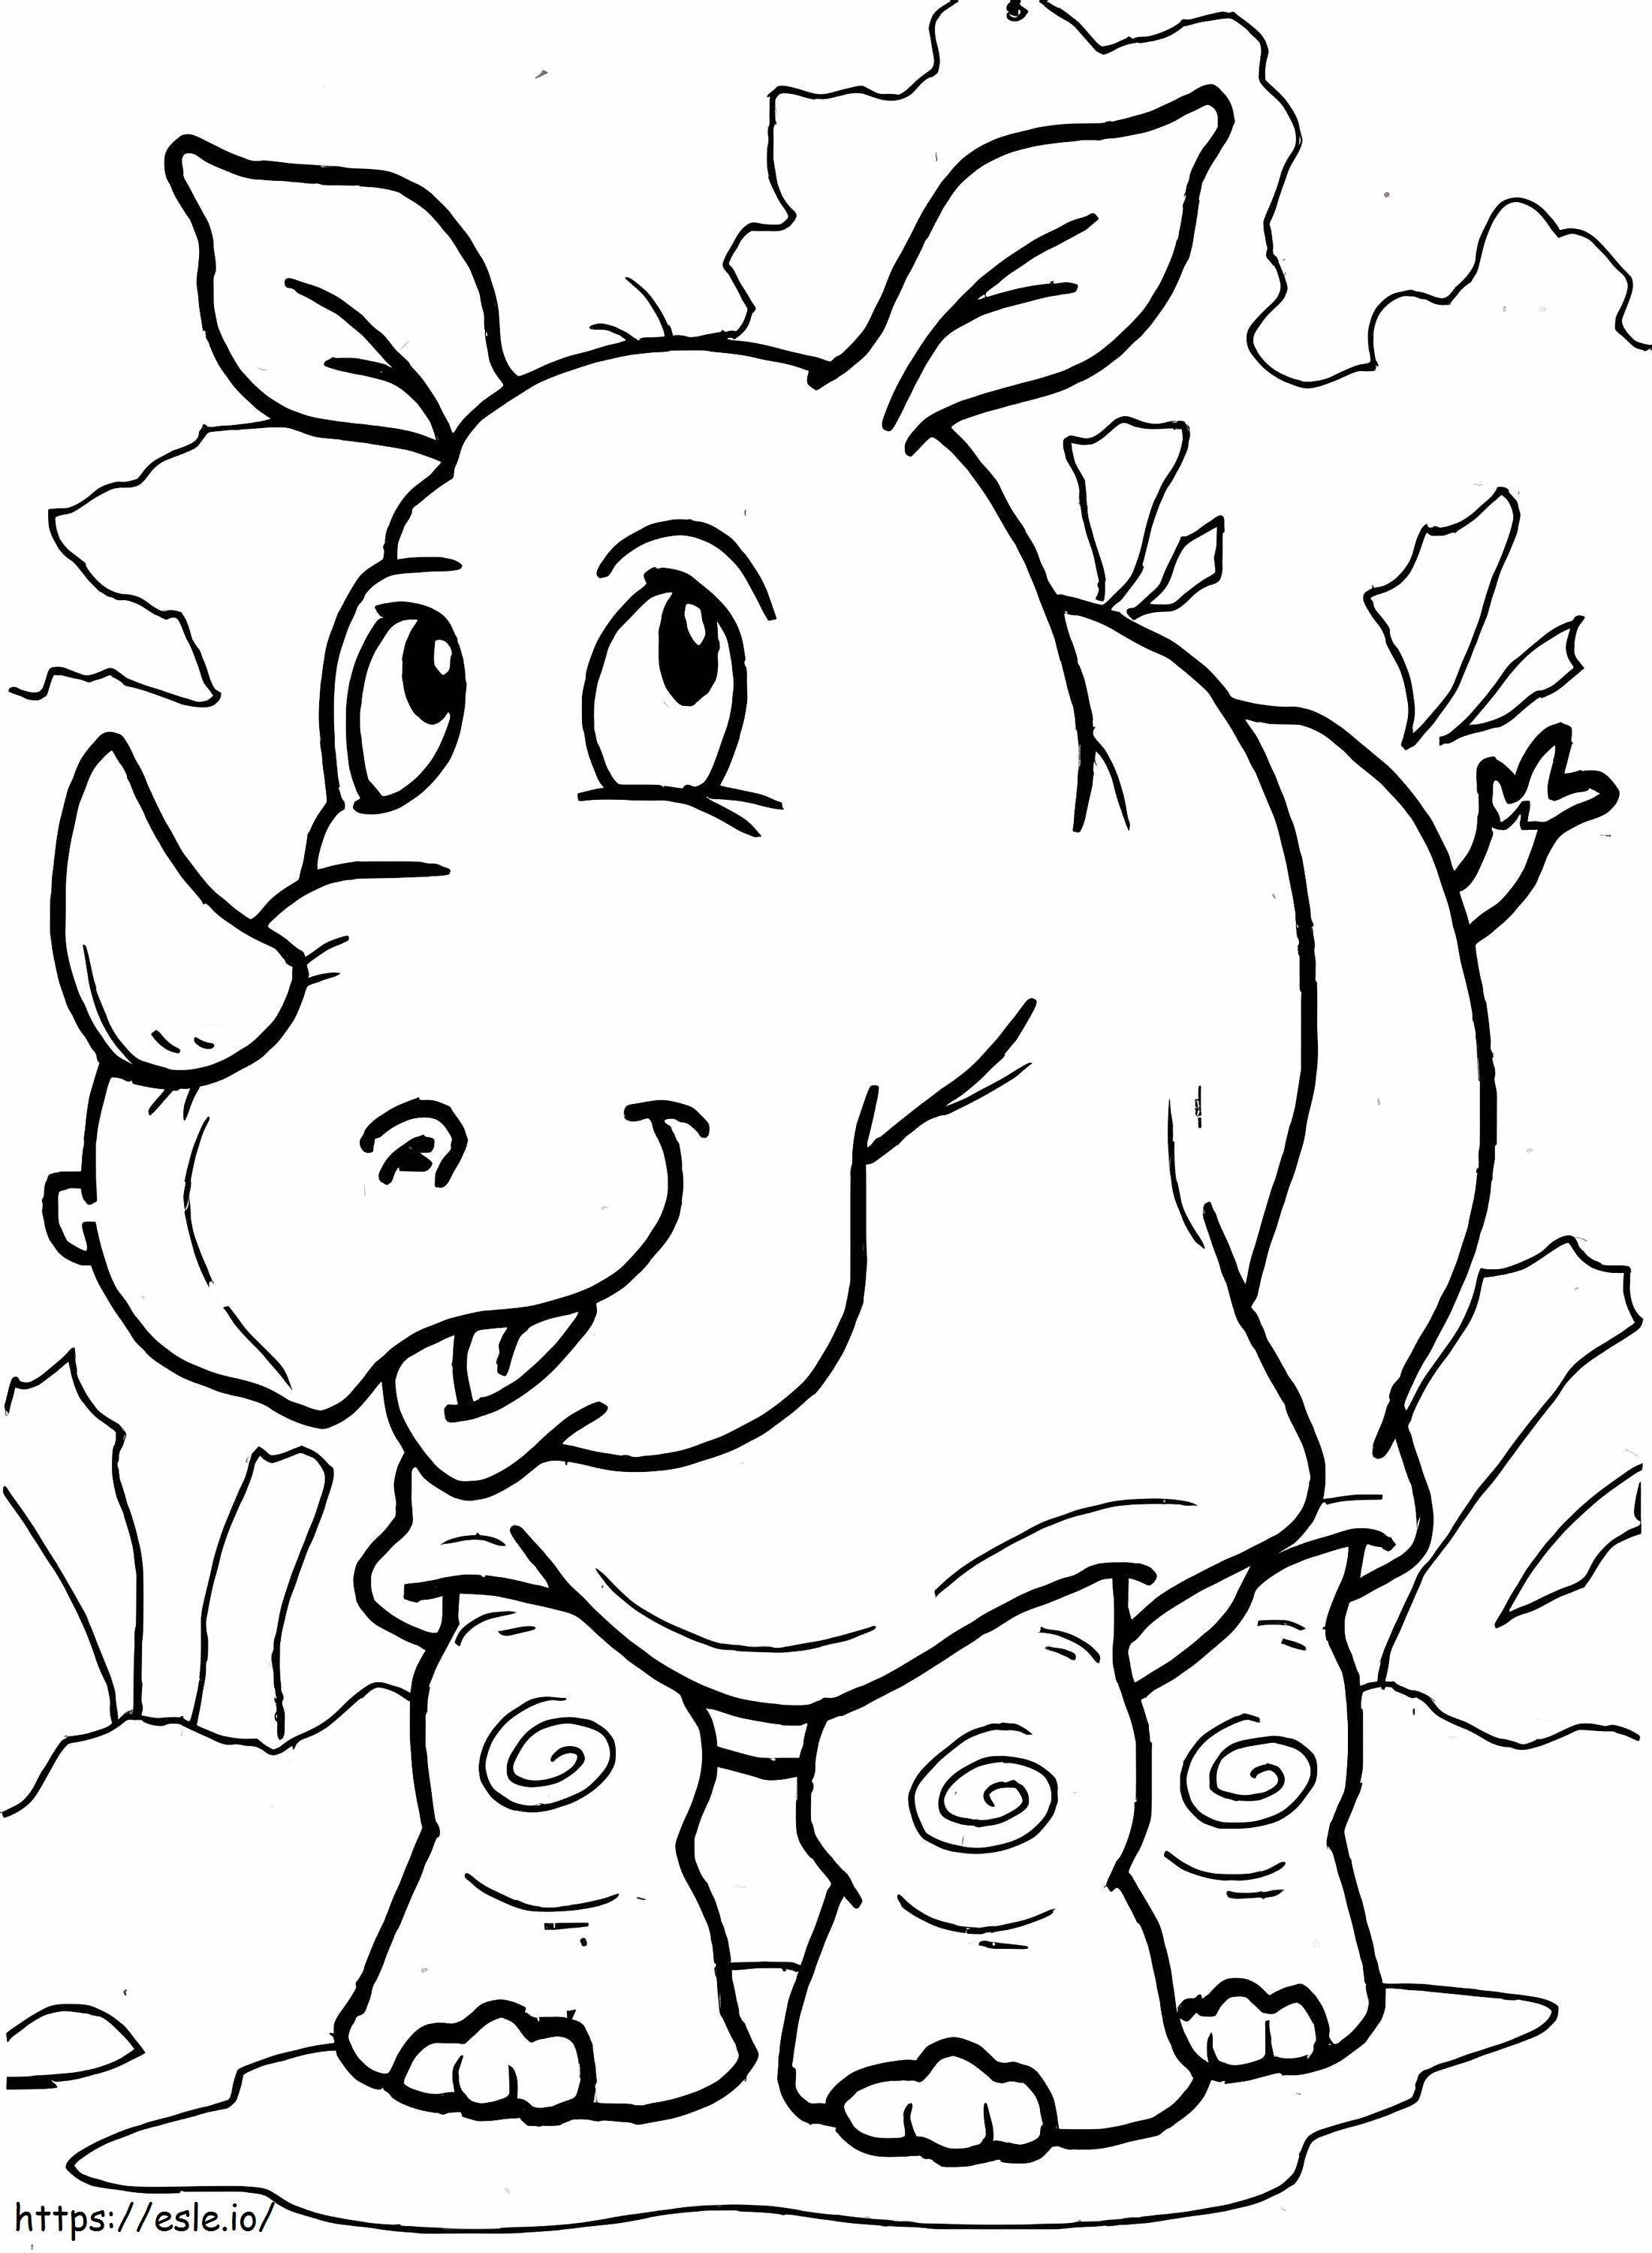 Coloriage Rhinocéros Kawaii à imprimer dessin